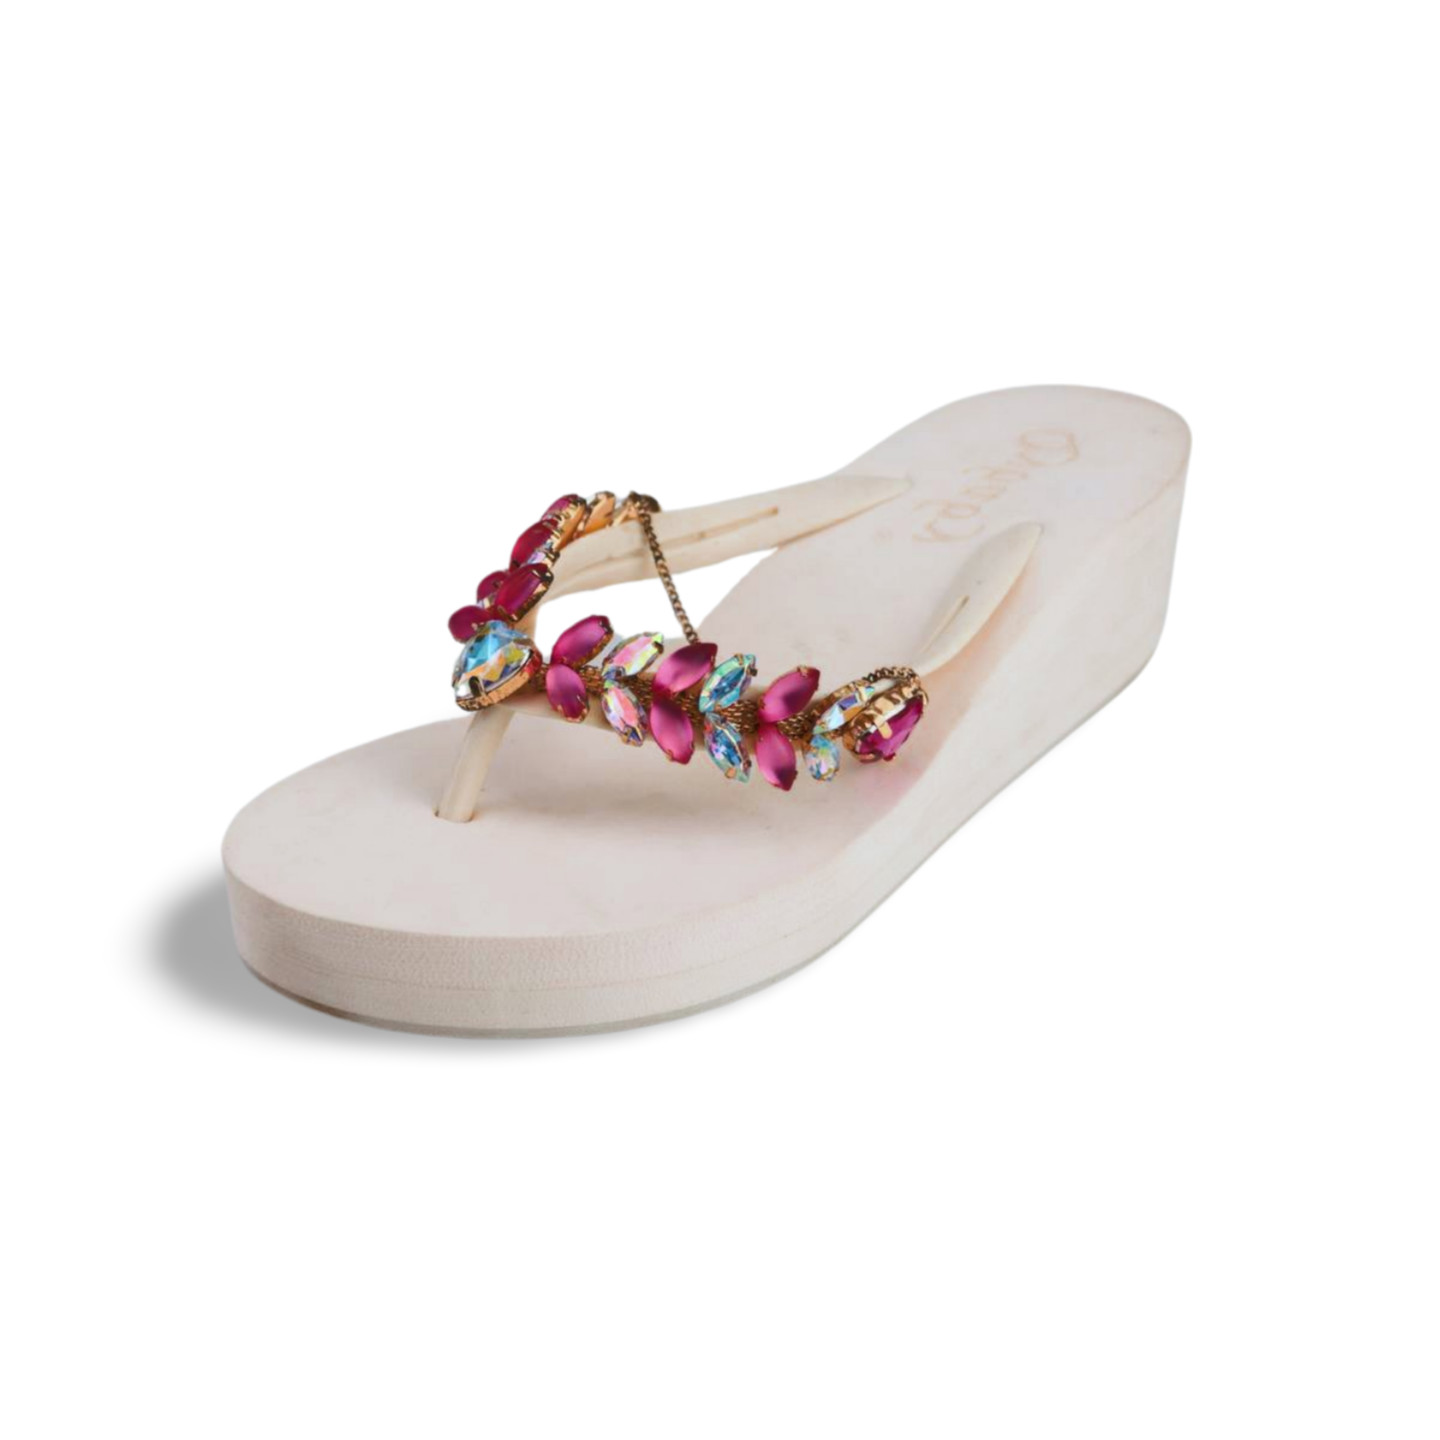 Women Rhinestone Wedges Flip Flop Summer Casual Sandals